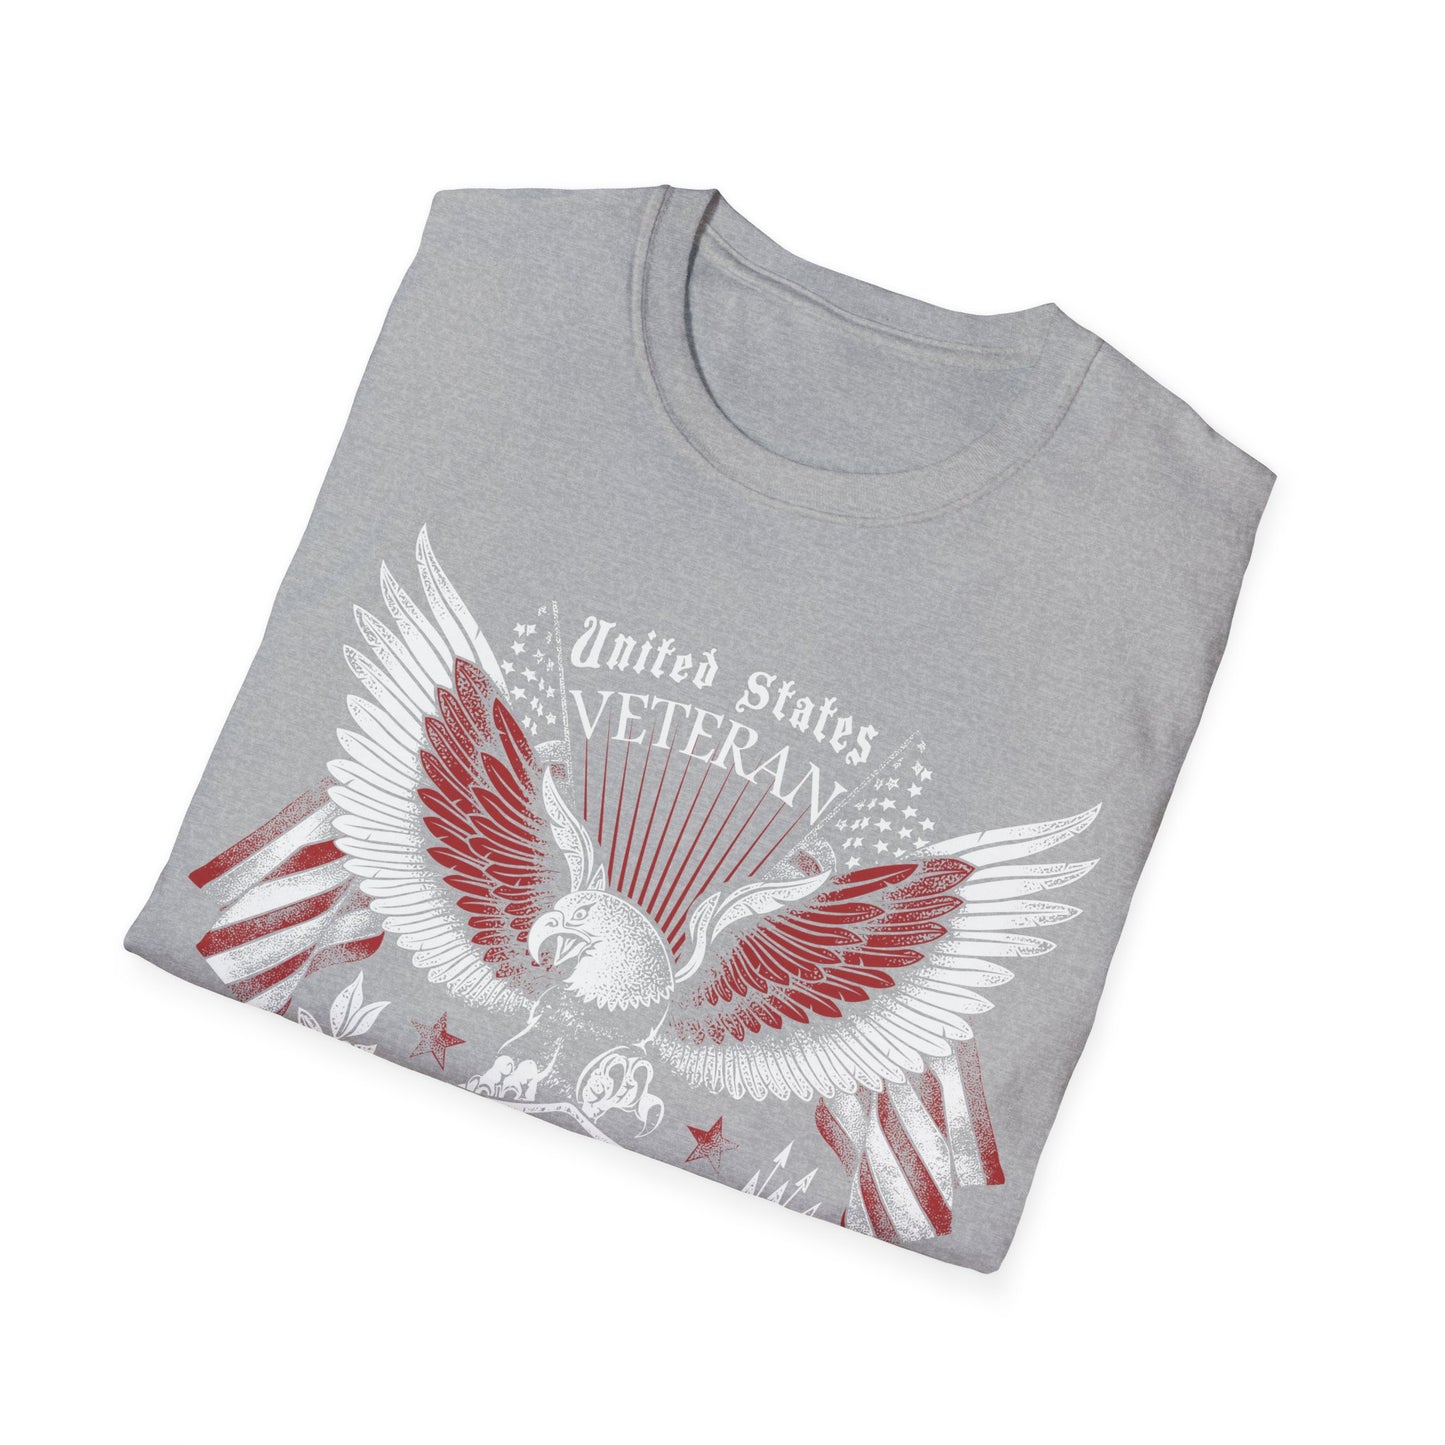 United States Veteran - Unisex Softstyle T-Shirt